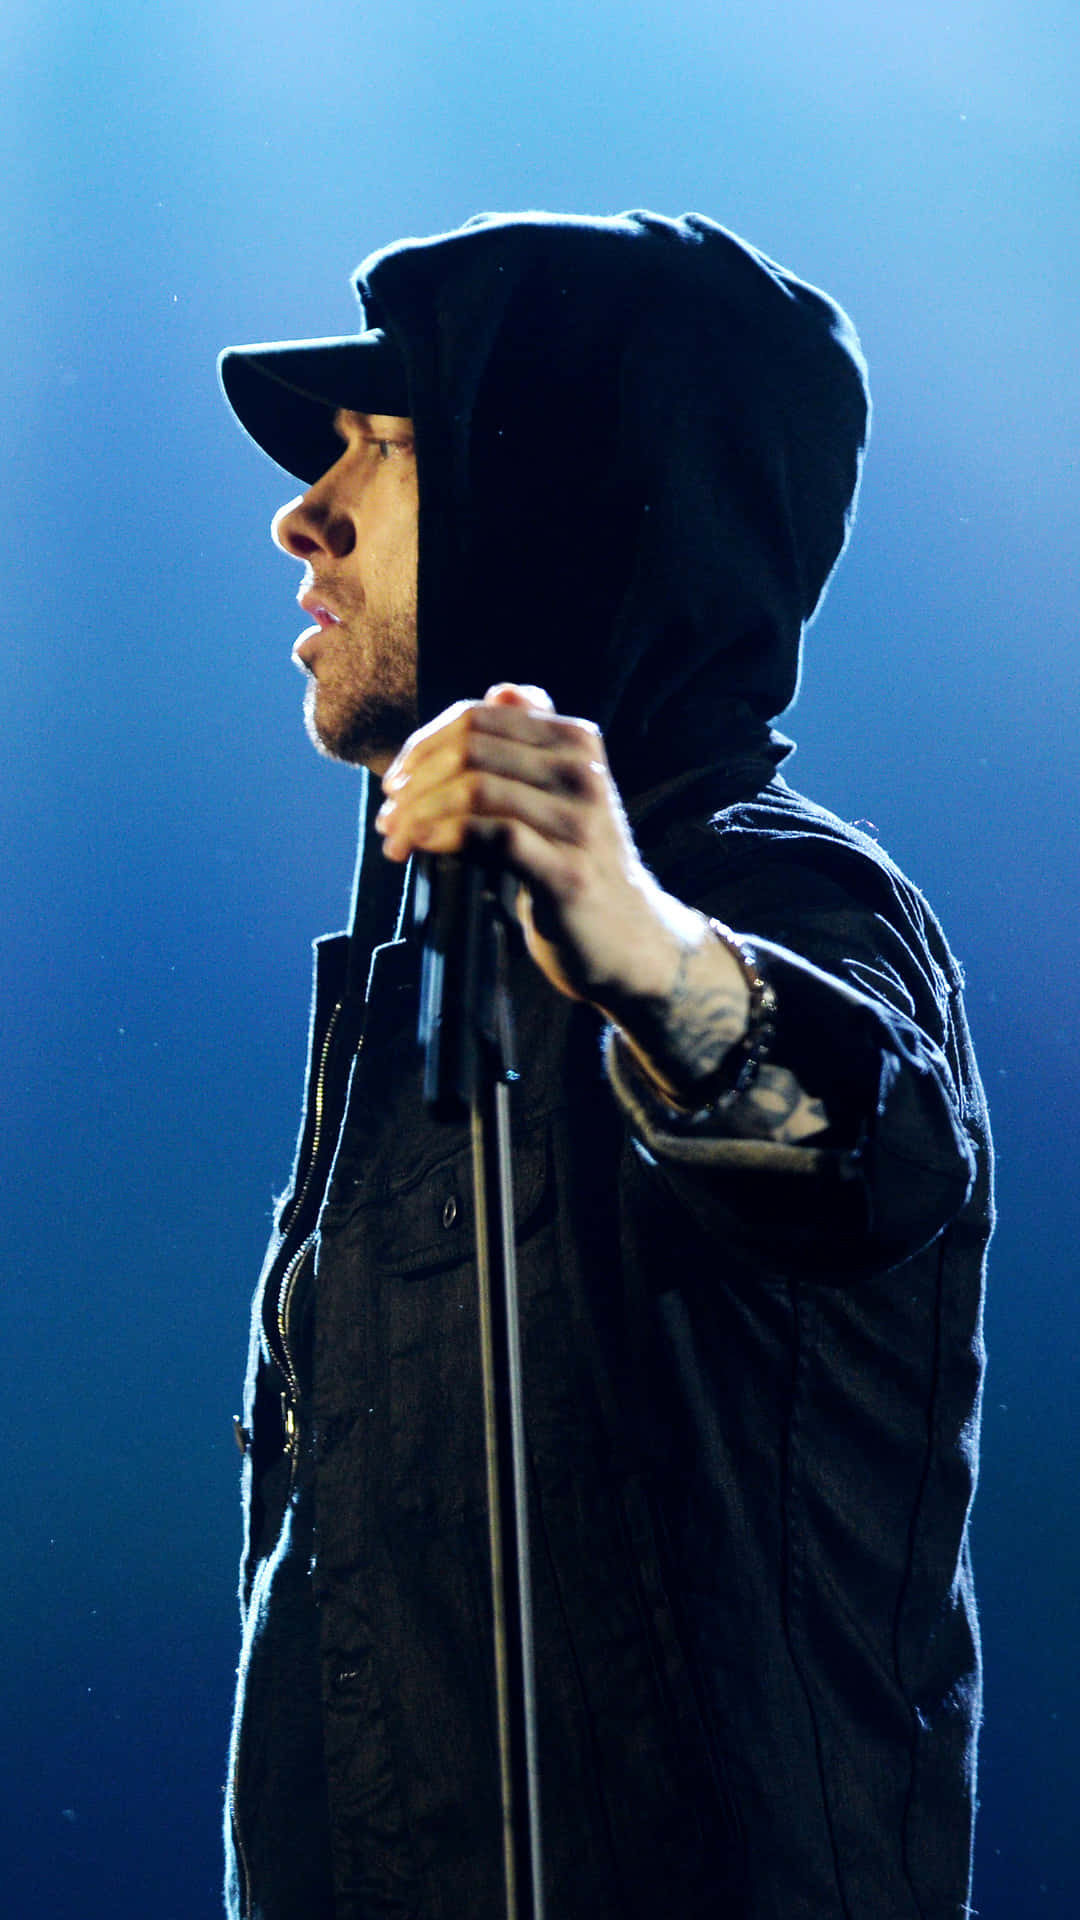 Eminem Performing on Stage